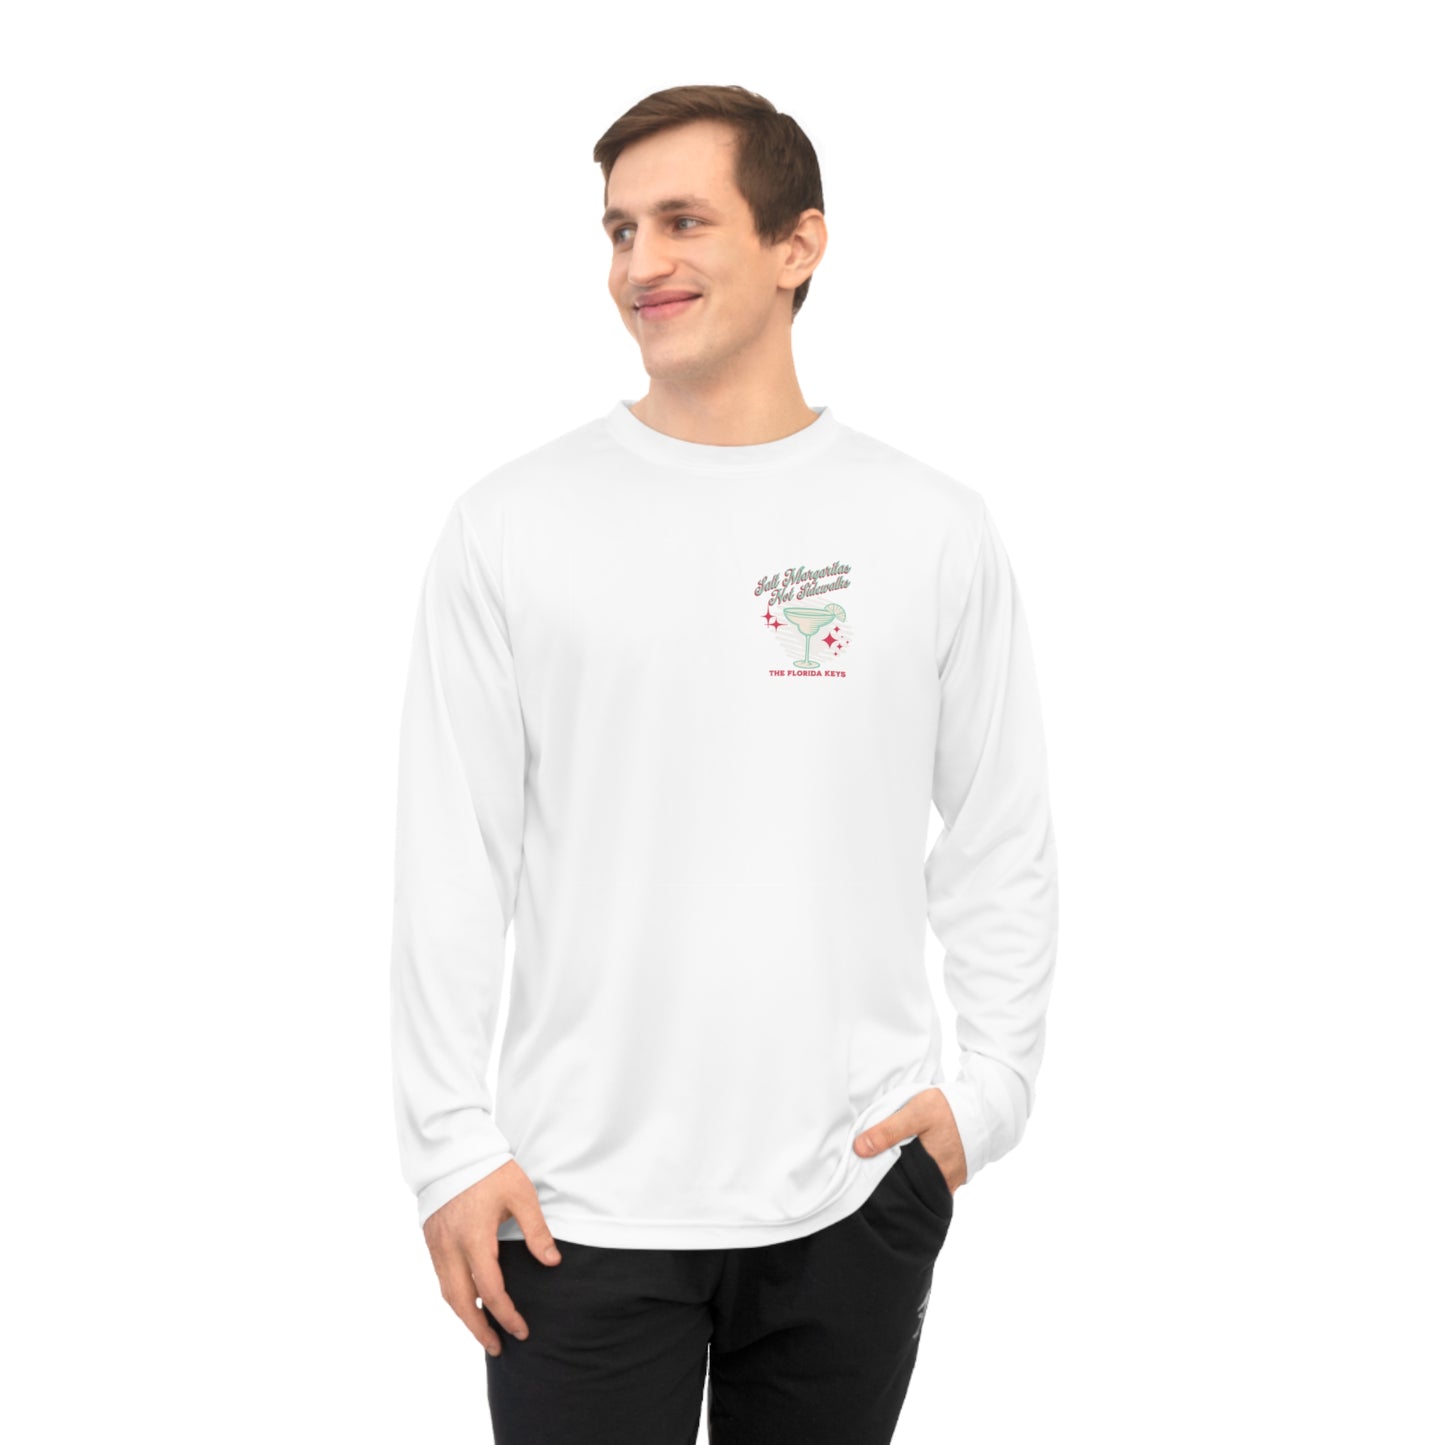 Salt Margaritas not Sidewalks - long sleeve fishing shirt - UV shirt - florida fishing shirt